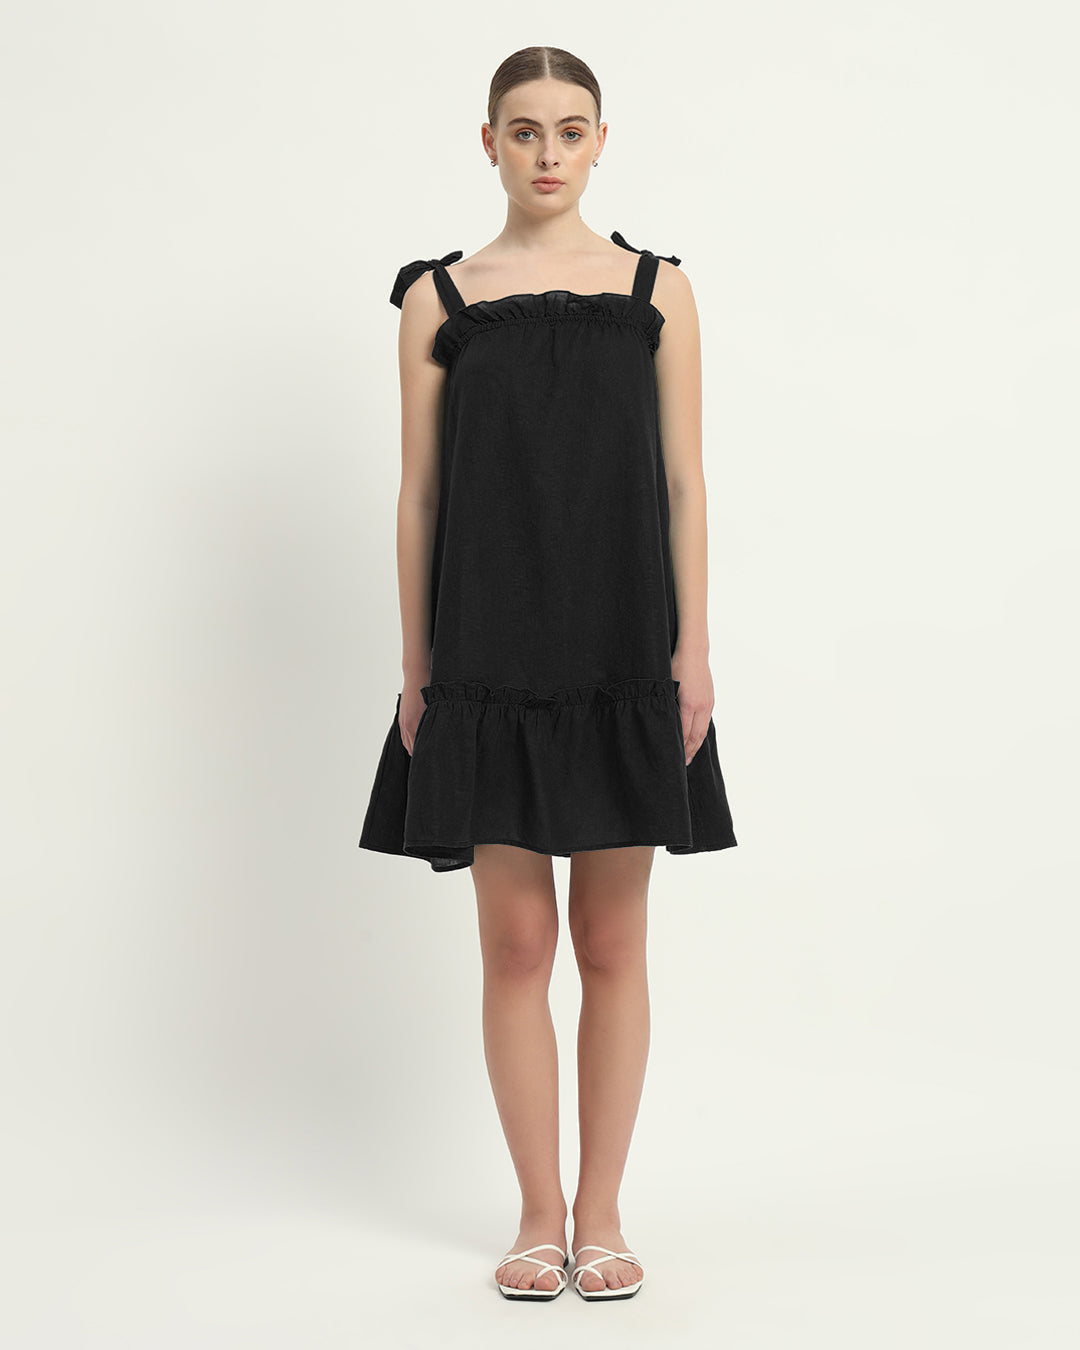 The Amalfi Noir Cotton Dress